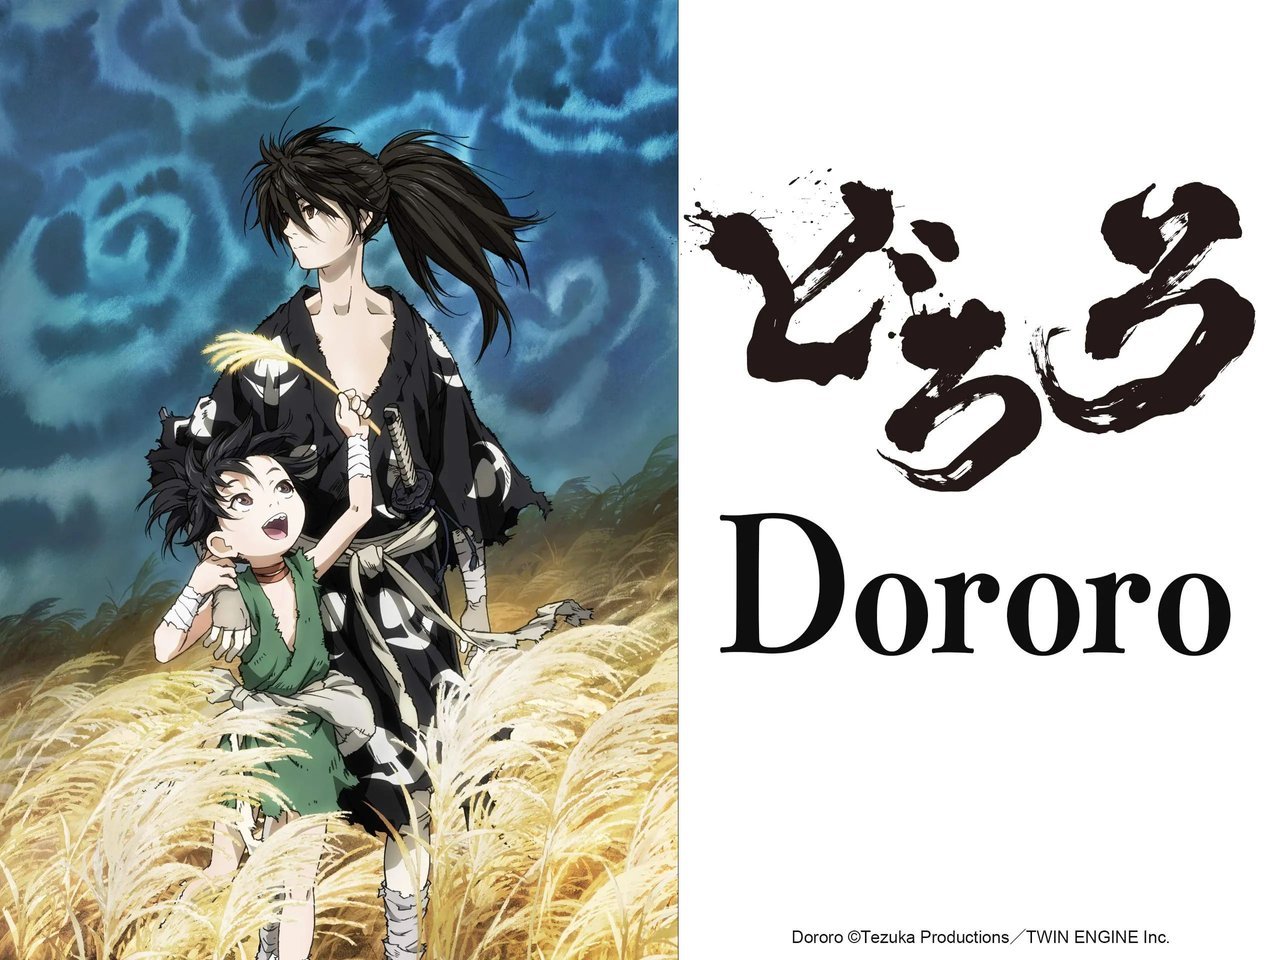 Dororo Anime - Few Hours Before Dororo Continuous Airing